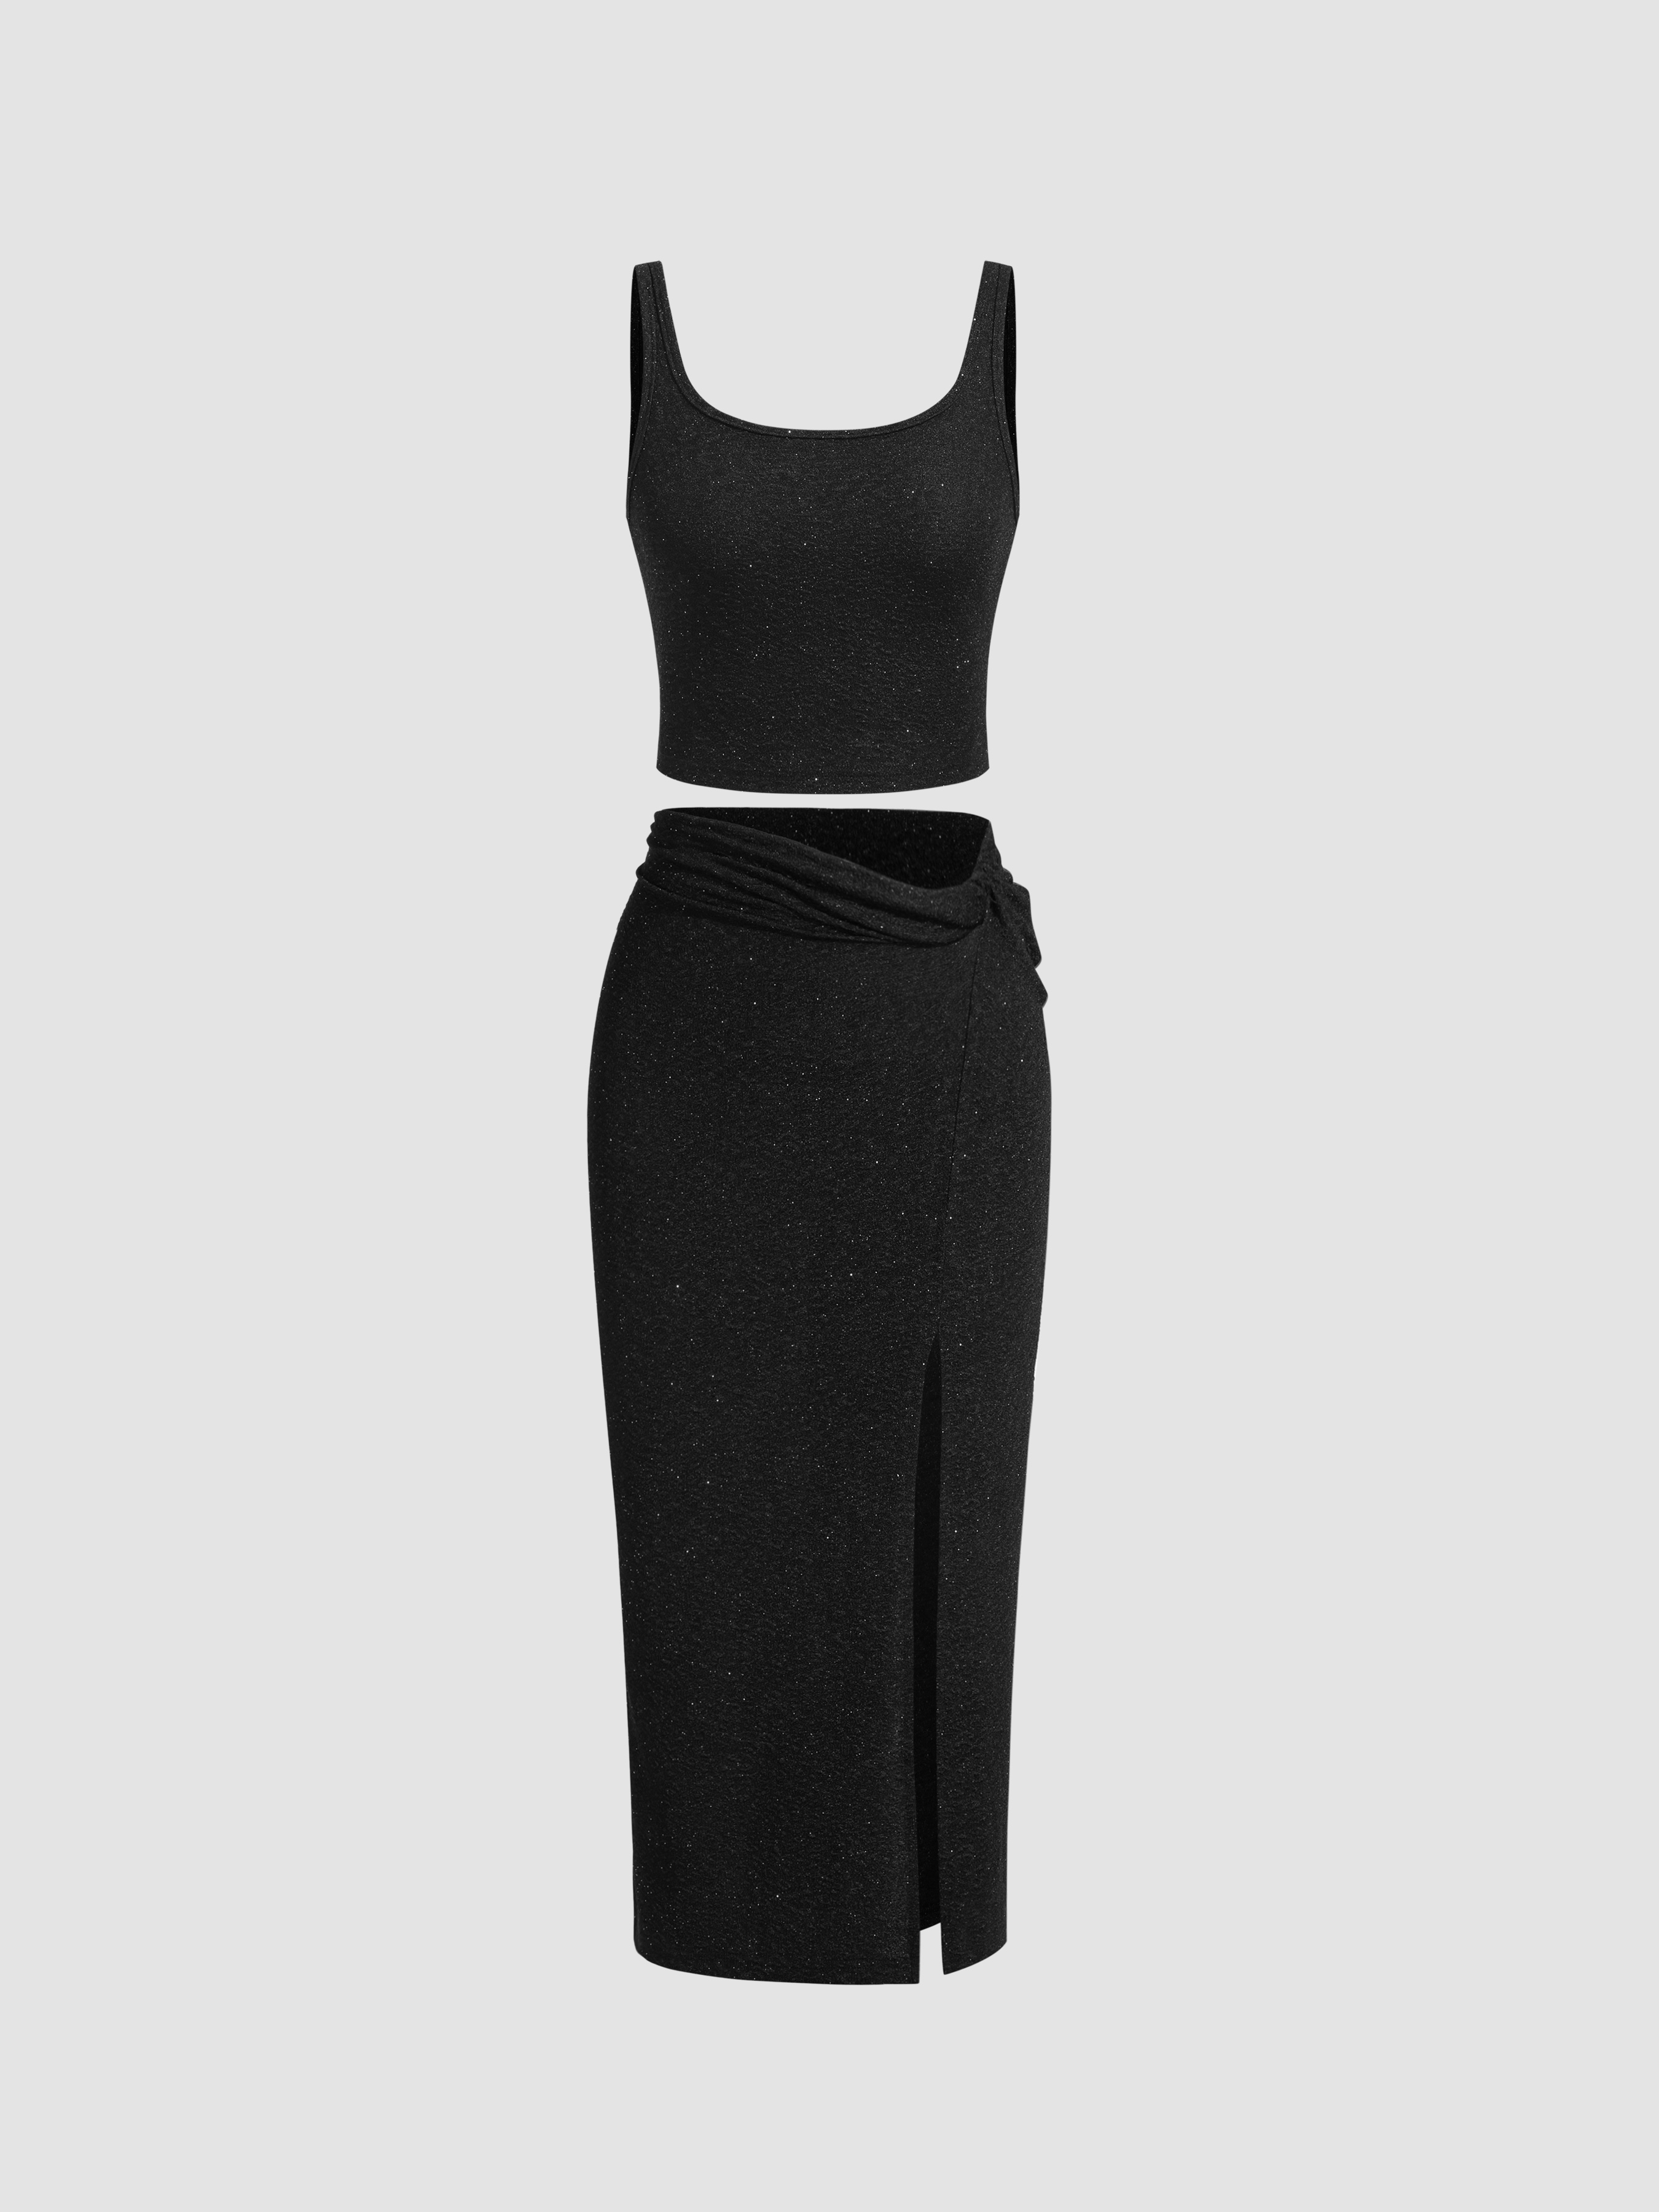 U-neckline Solid Top & Split Maxi Skirt Matching Set - Cider